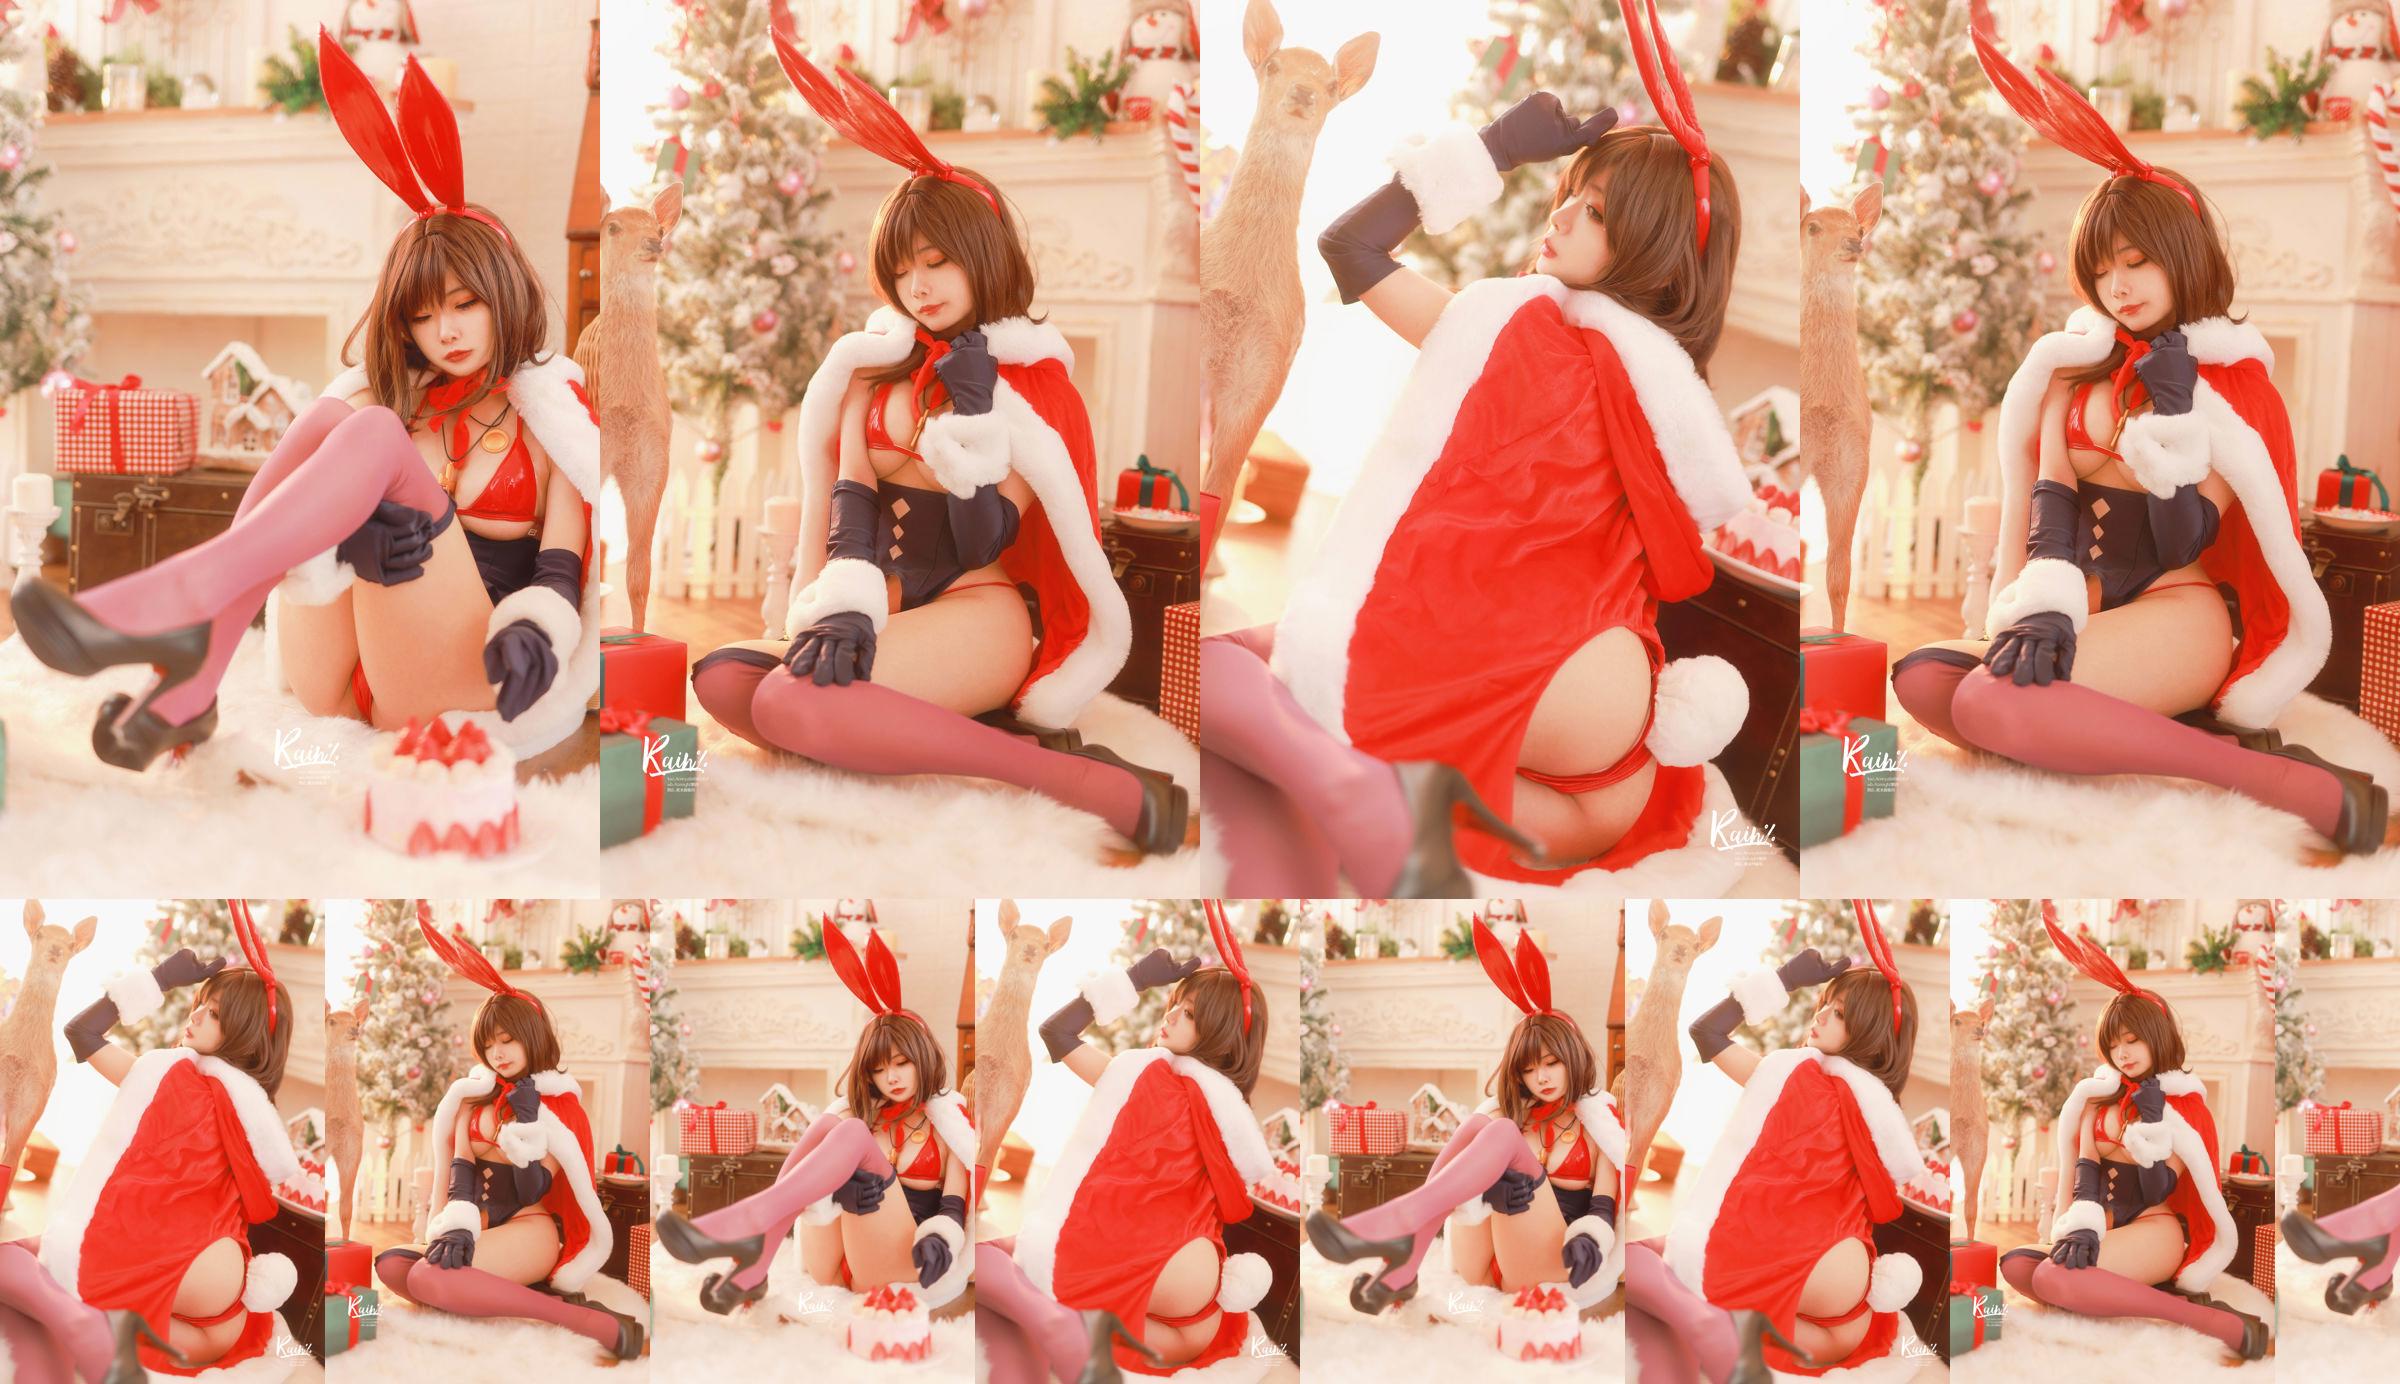 [Net Red COSER Photo] Anime blogger Rainight 魈雨-Christmas Rabbit No.97a00b Page 1